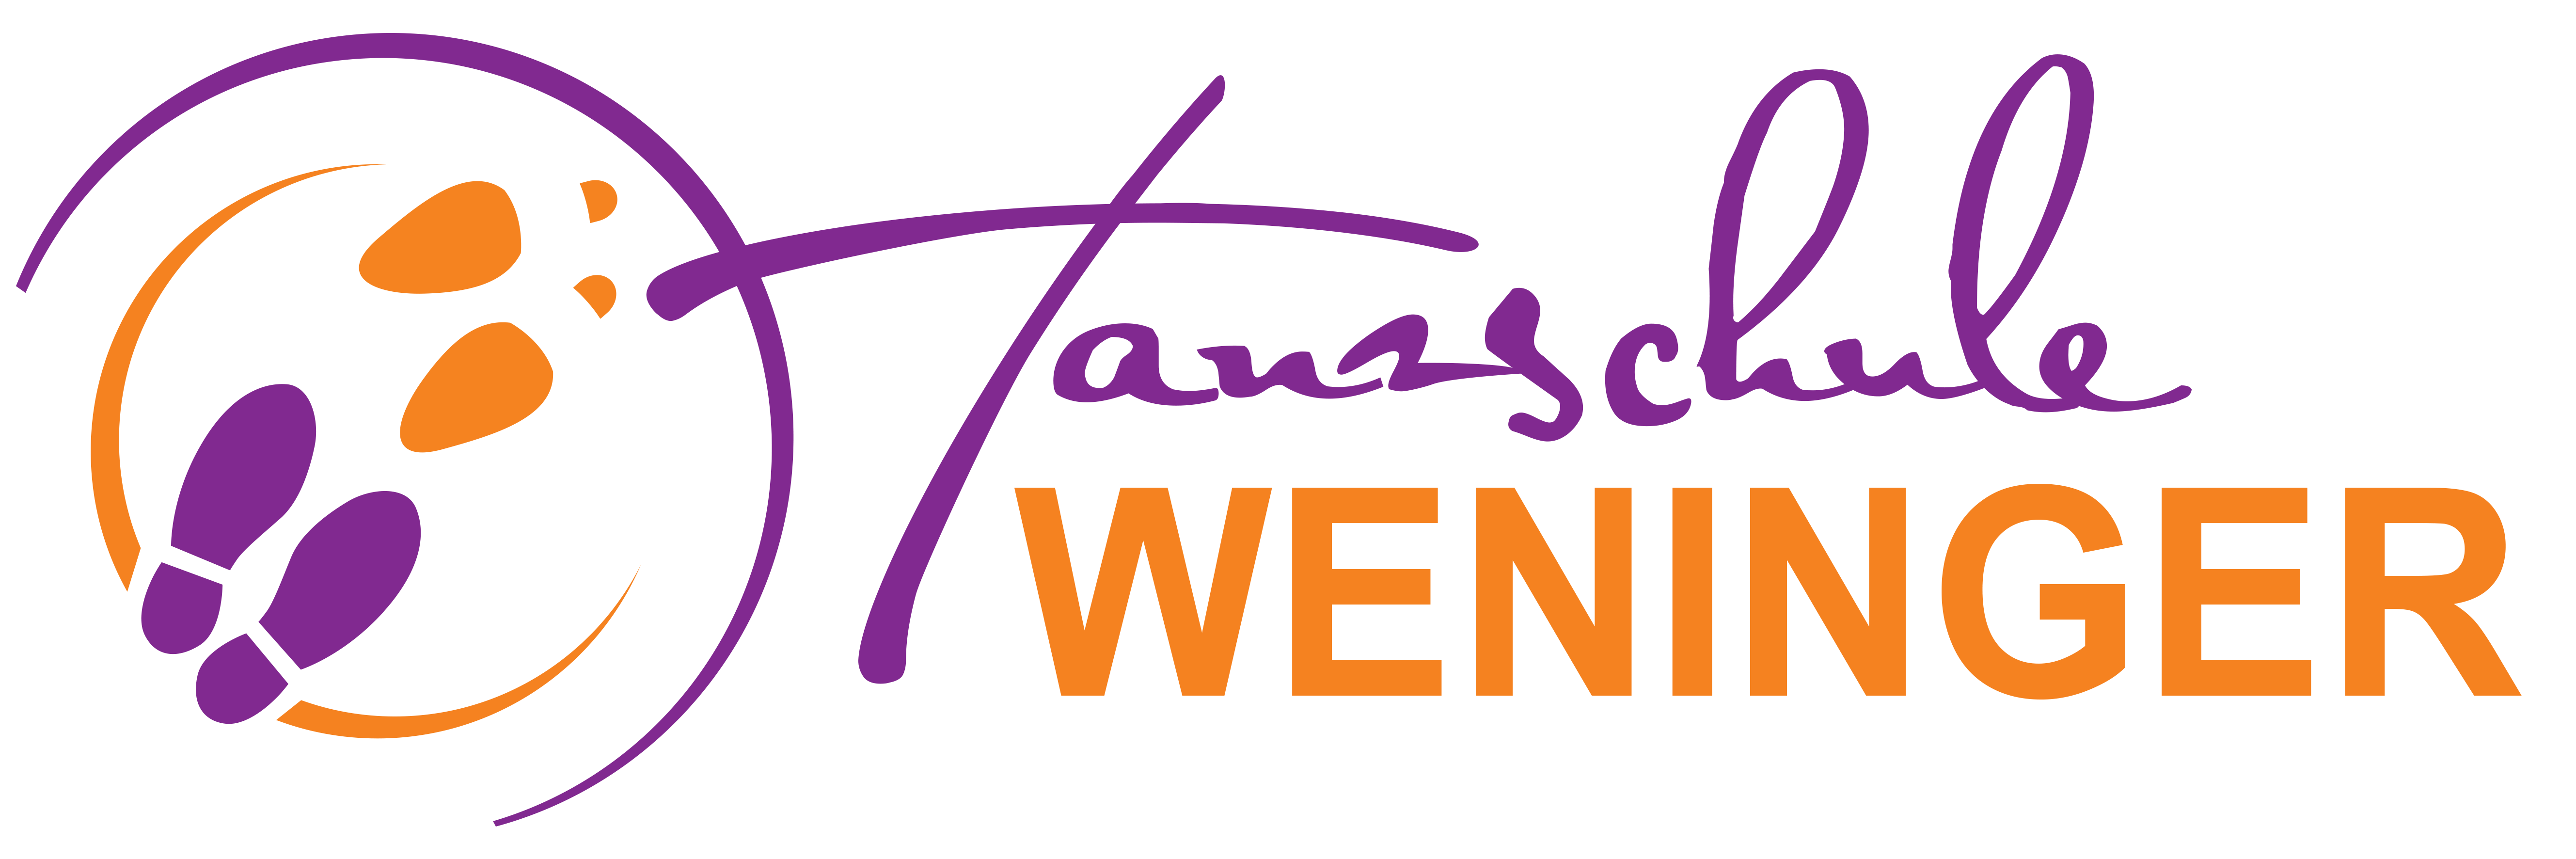 Tanzschule Weninger